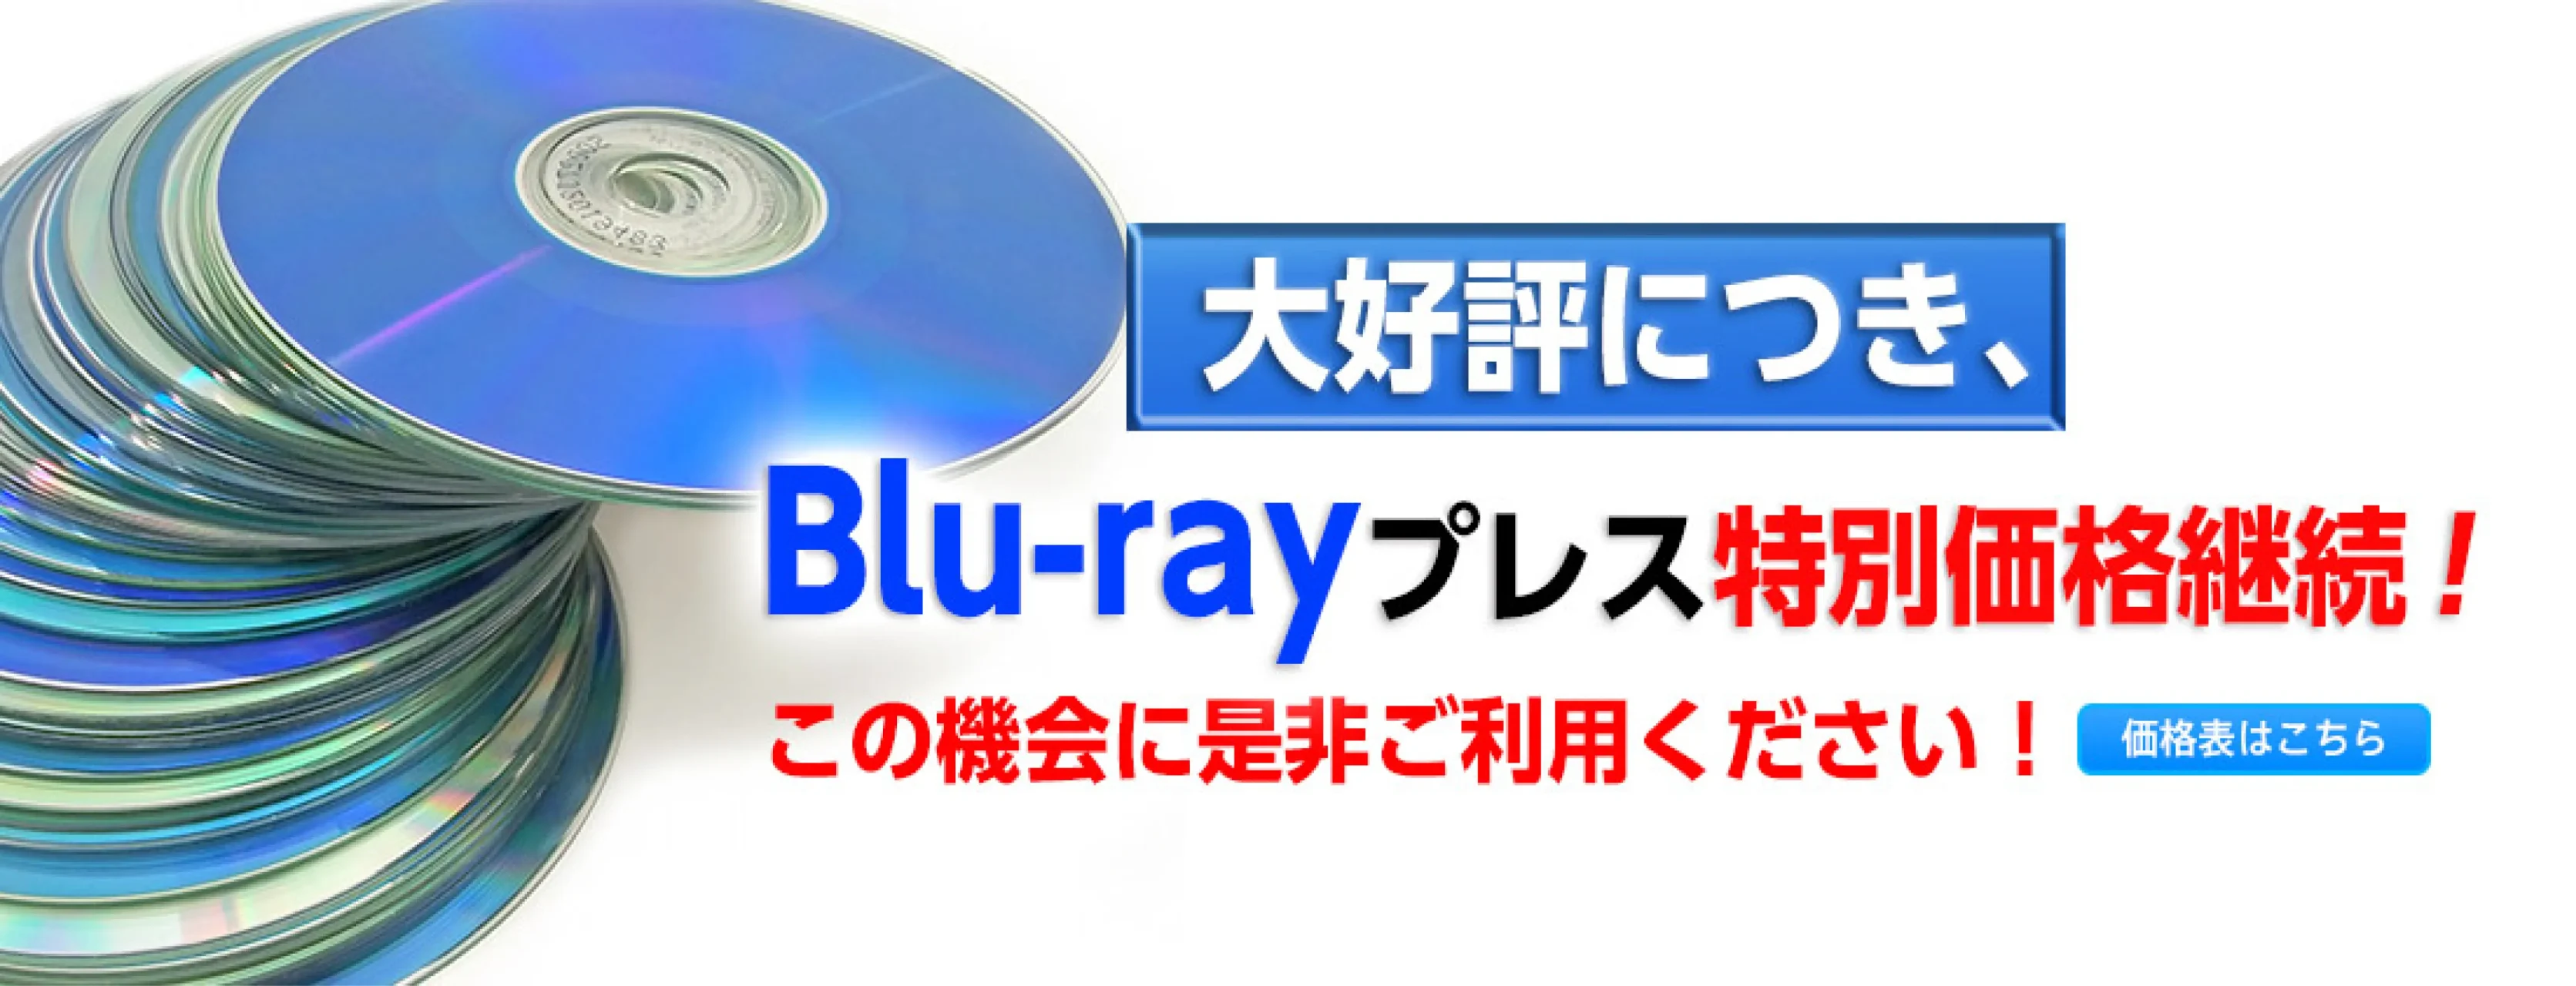 Blu-ray制作